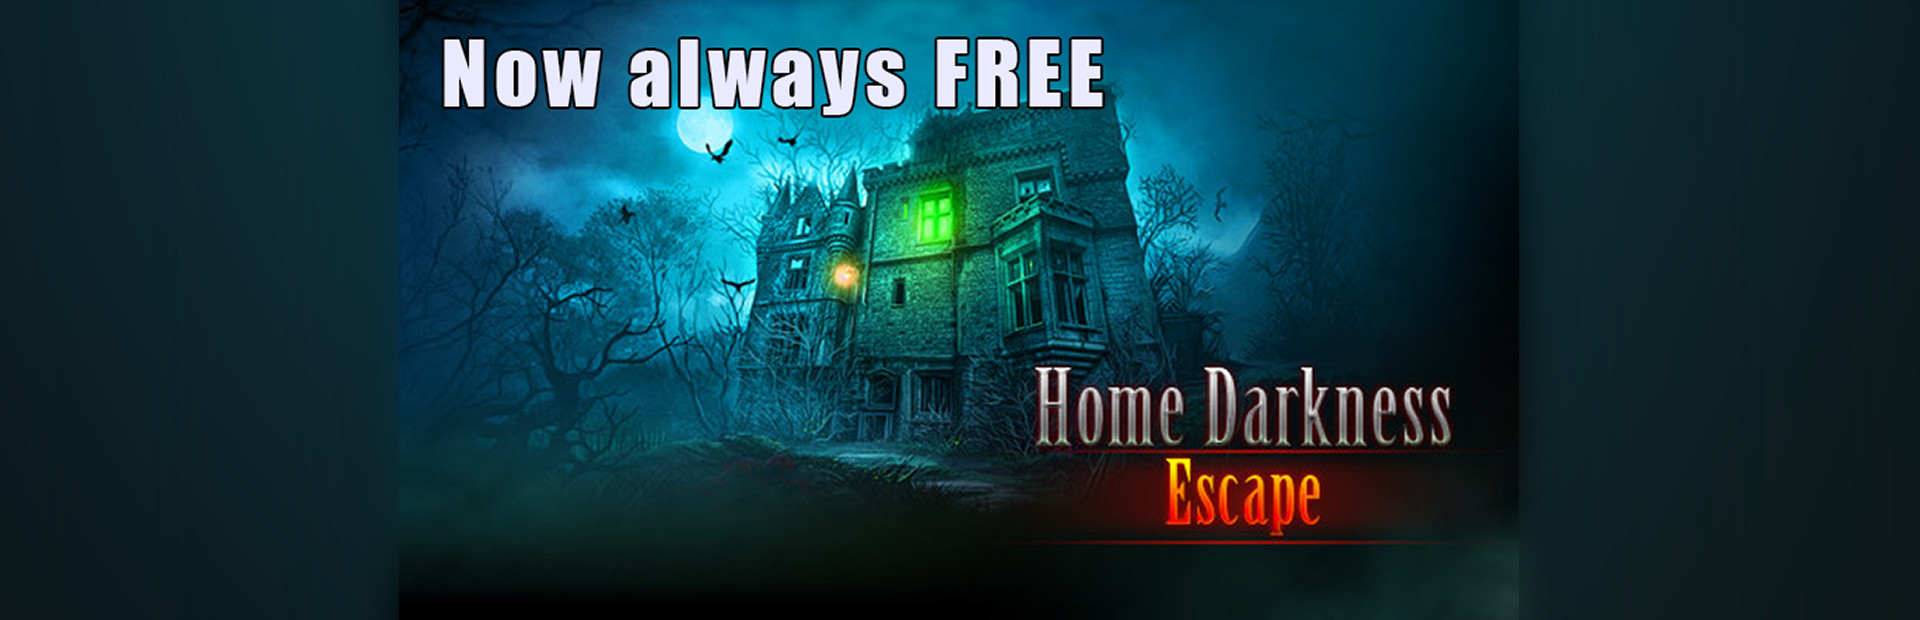 Home Darkness - Escape? cover image